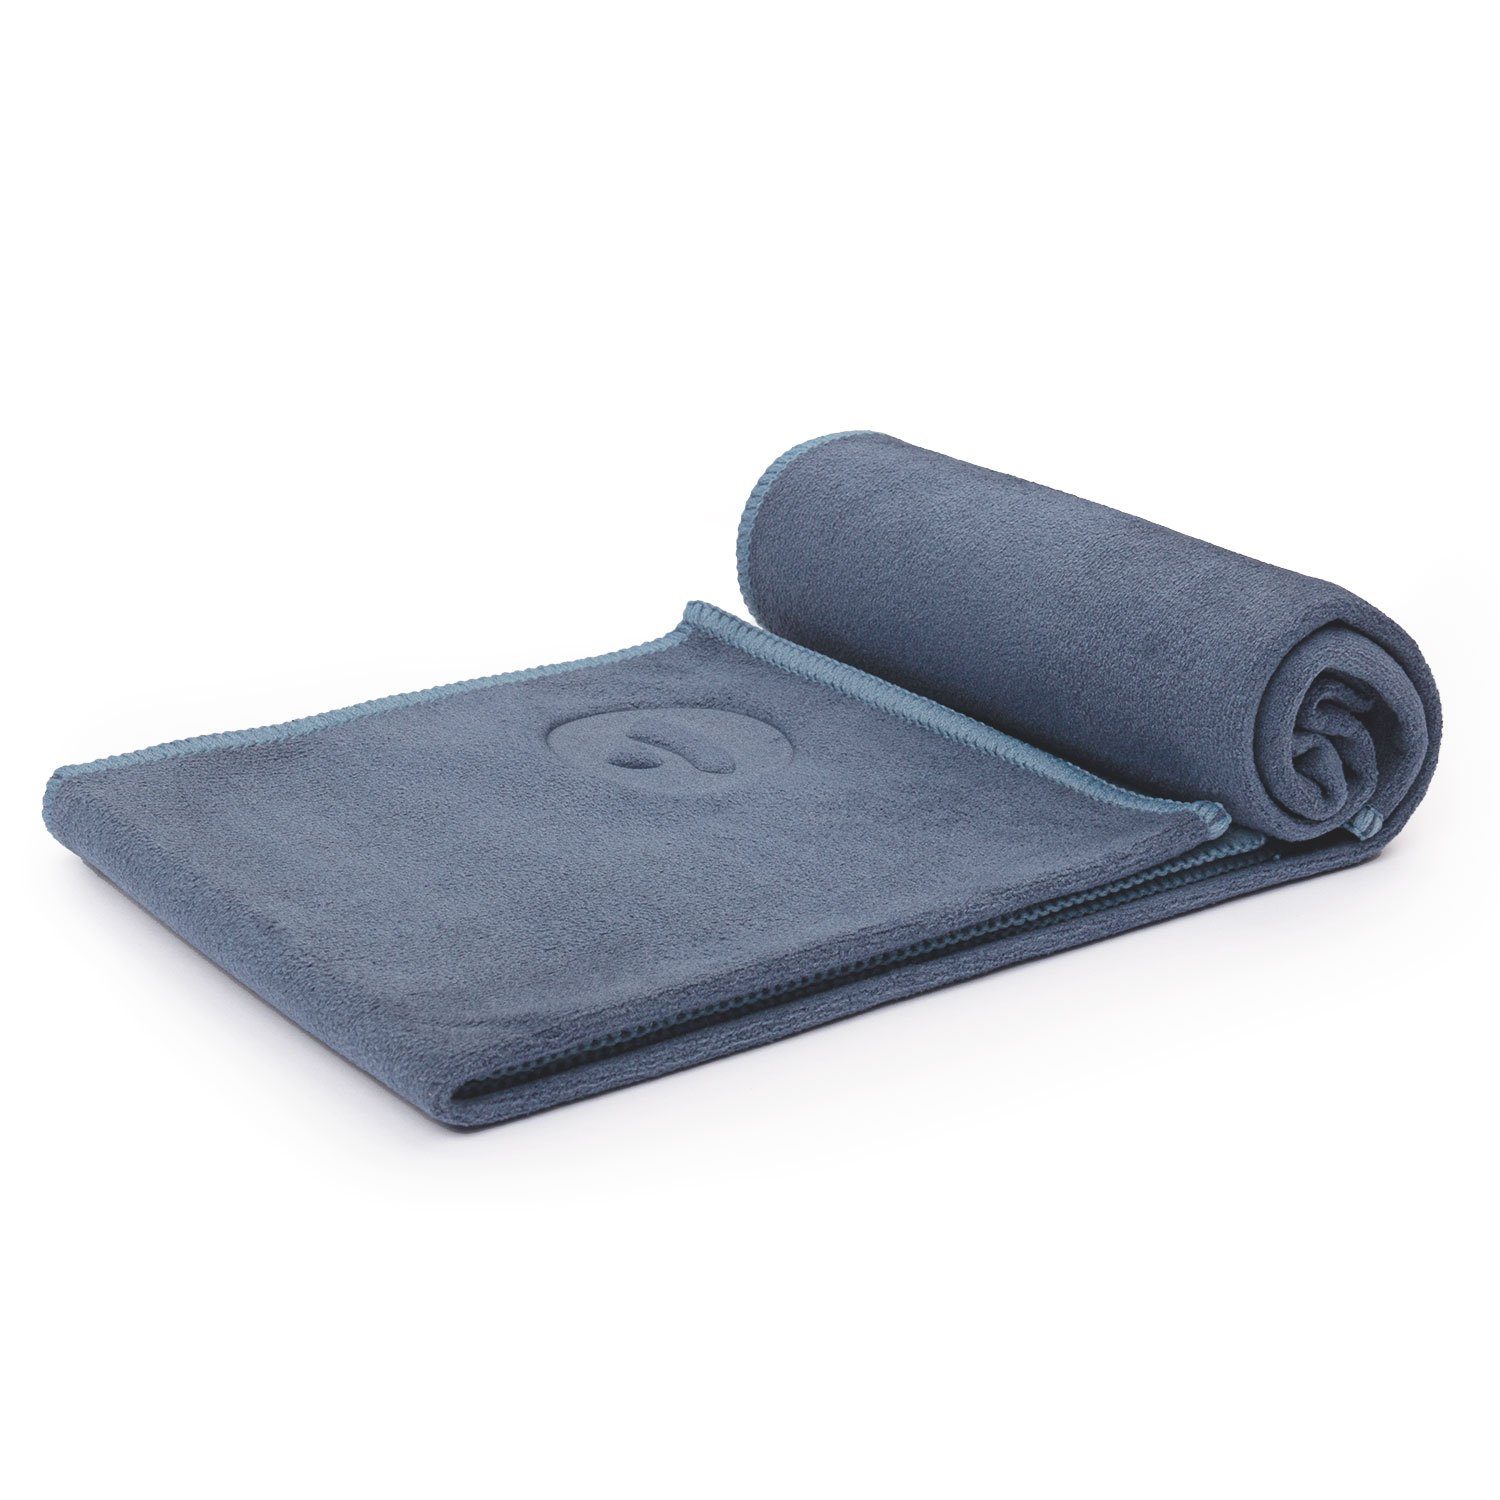 S Flow bodhi blue Handtuch moonlight Sporthandtuch Towel Yoga